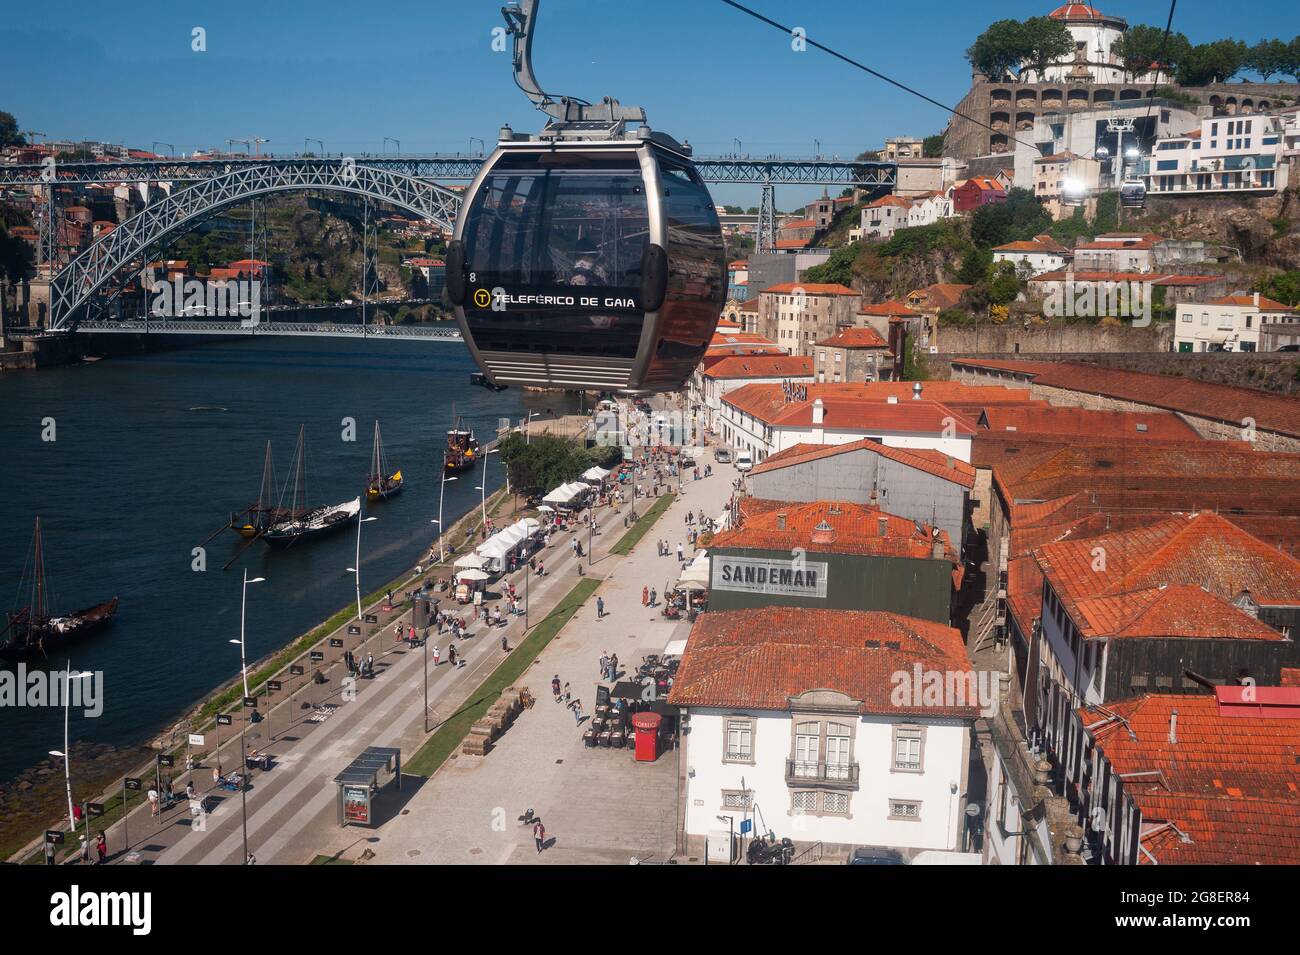 14.06.2018, Porto, Portugal, Europe - View from a gondola of the Teleferico  de Gaia cable car of the cityscape of Vila Nova de Gaia along Douro River  Stock Photo - Alamy